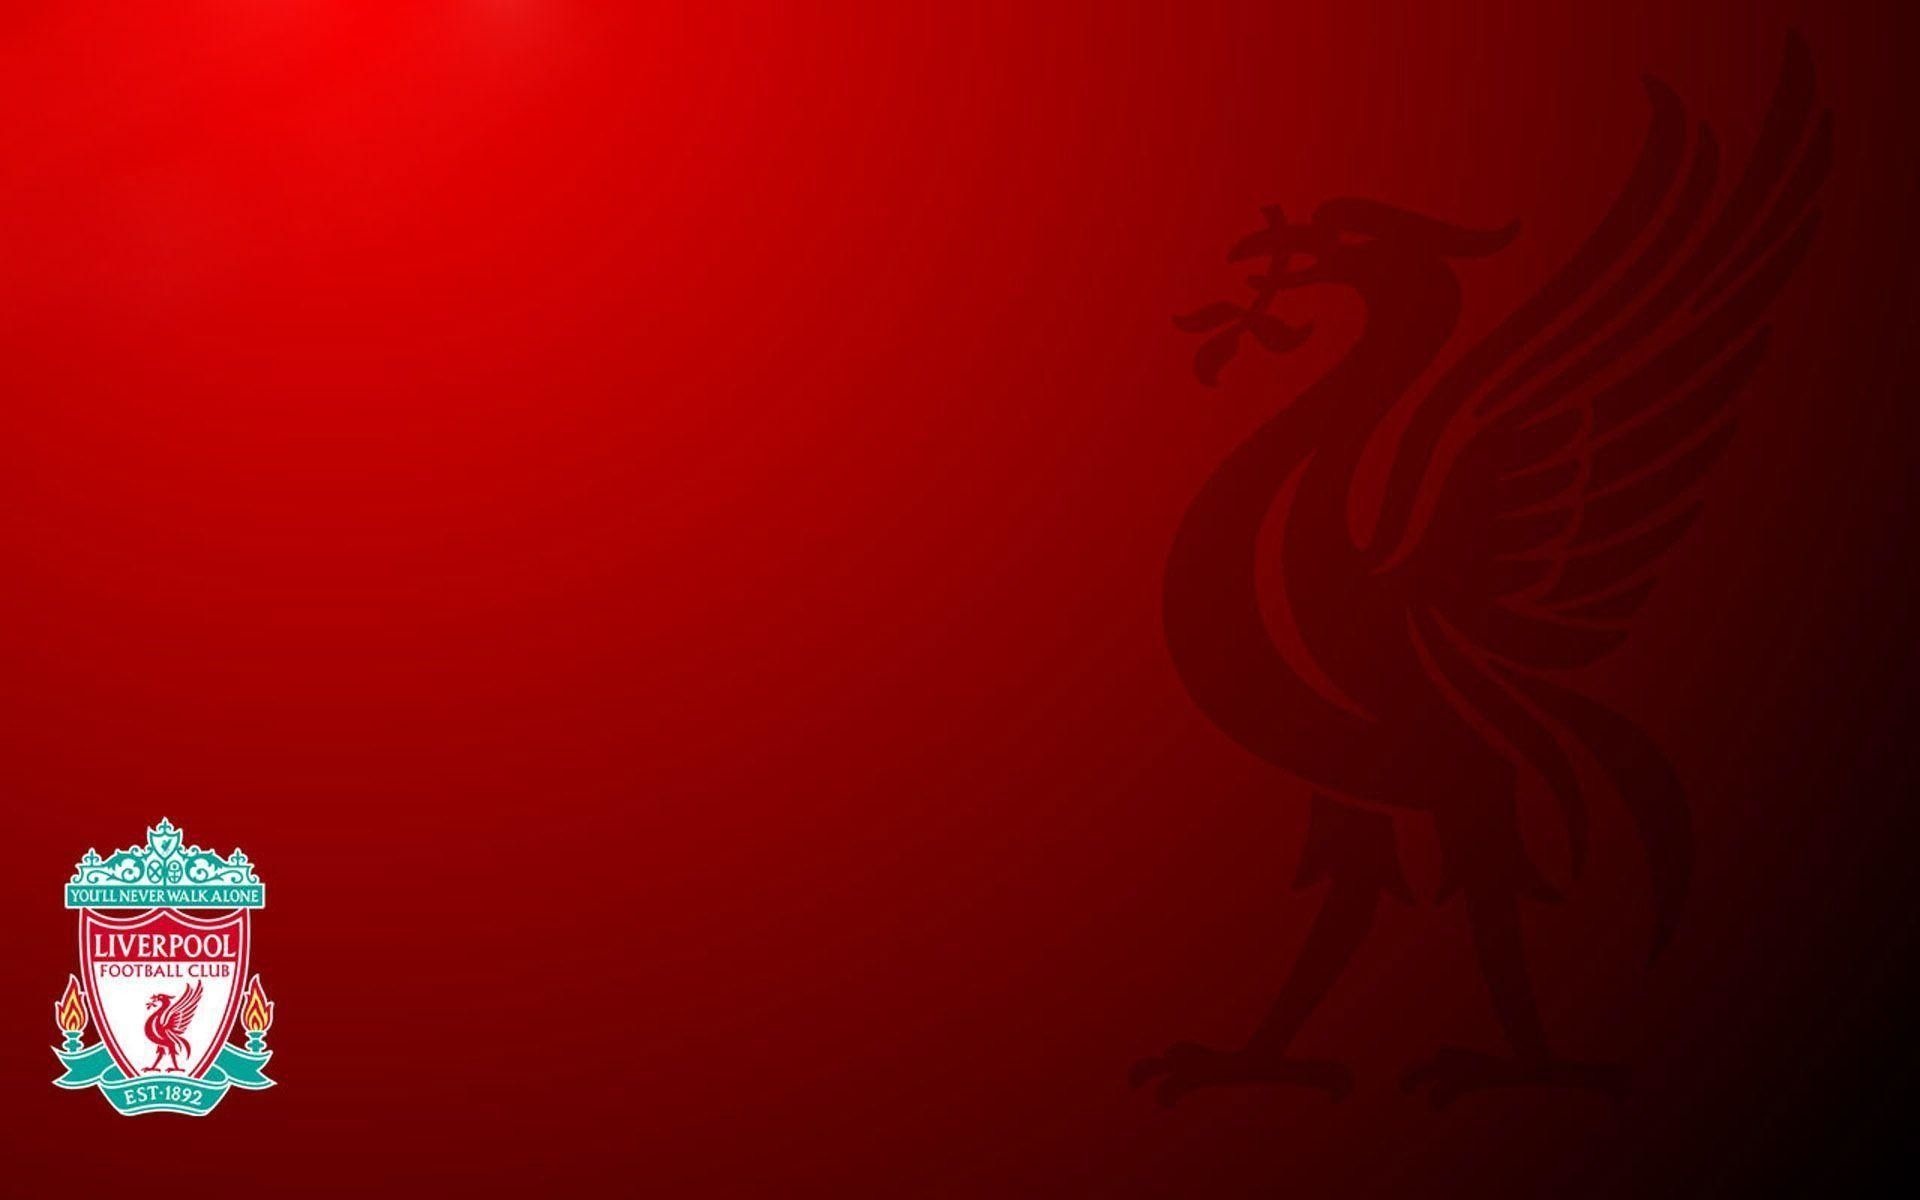 Liverpool Football Club: The winner of six European Cup/Champions League trophies. 1920x1200 HD Wallpaper.